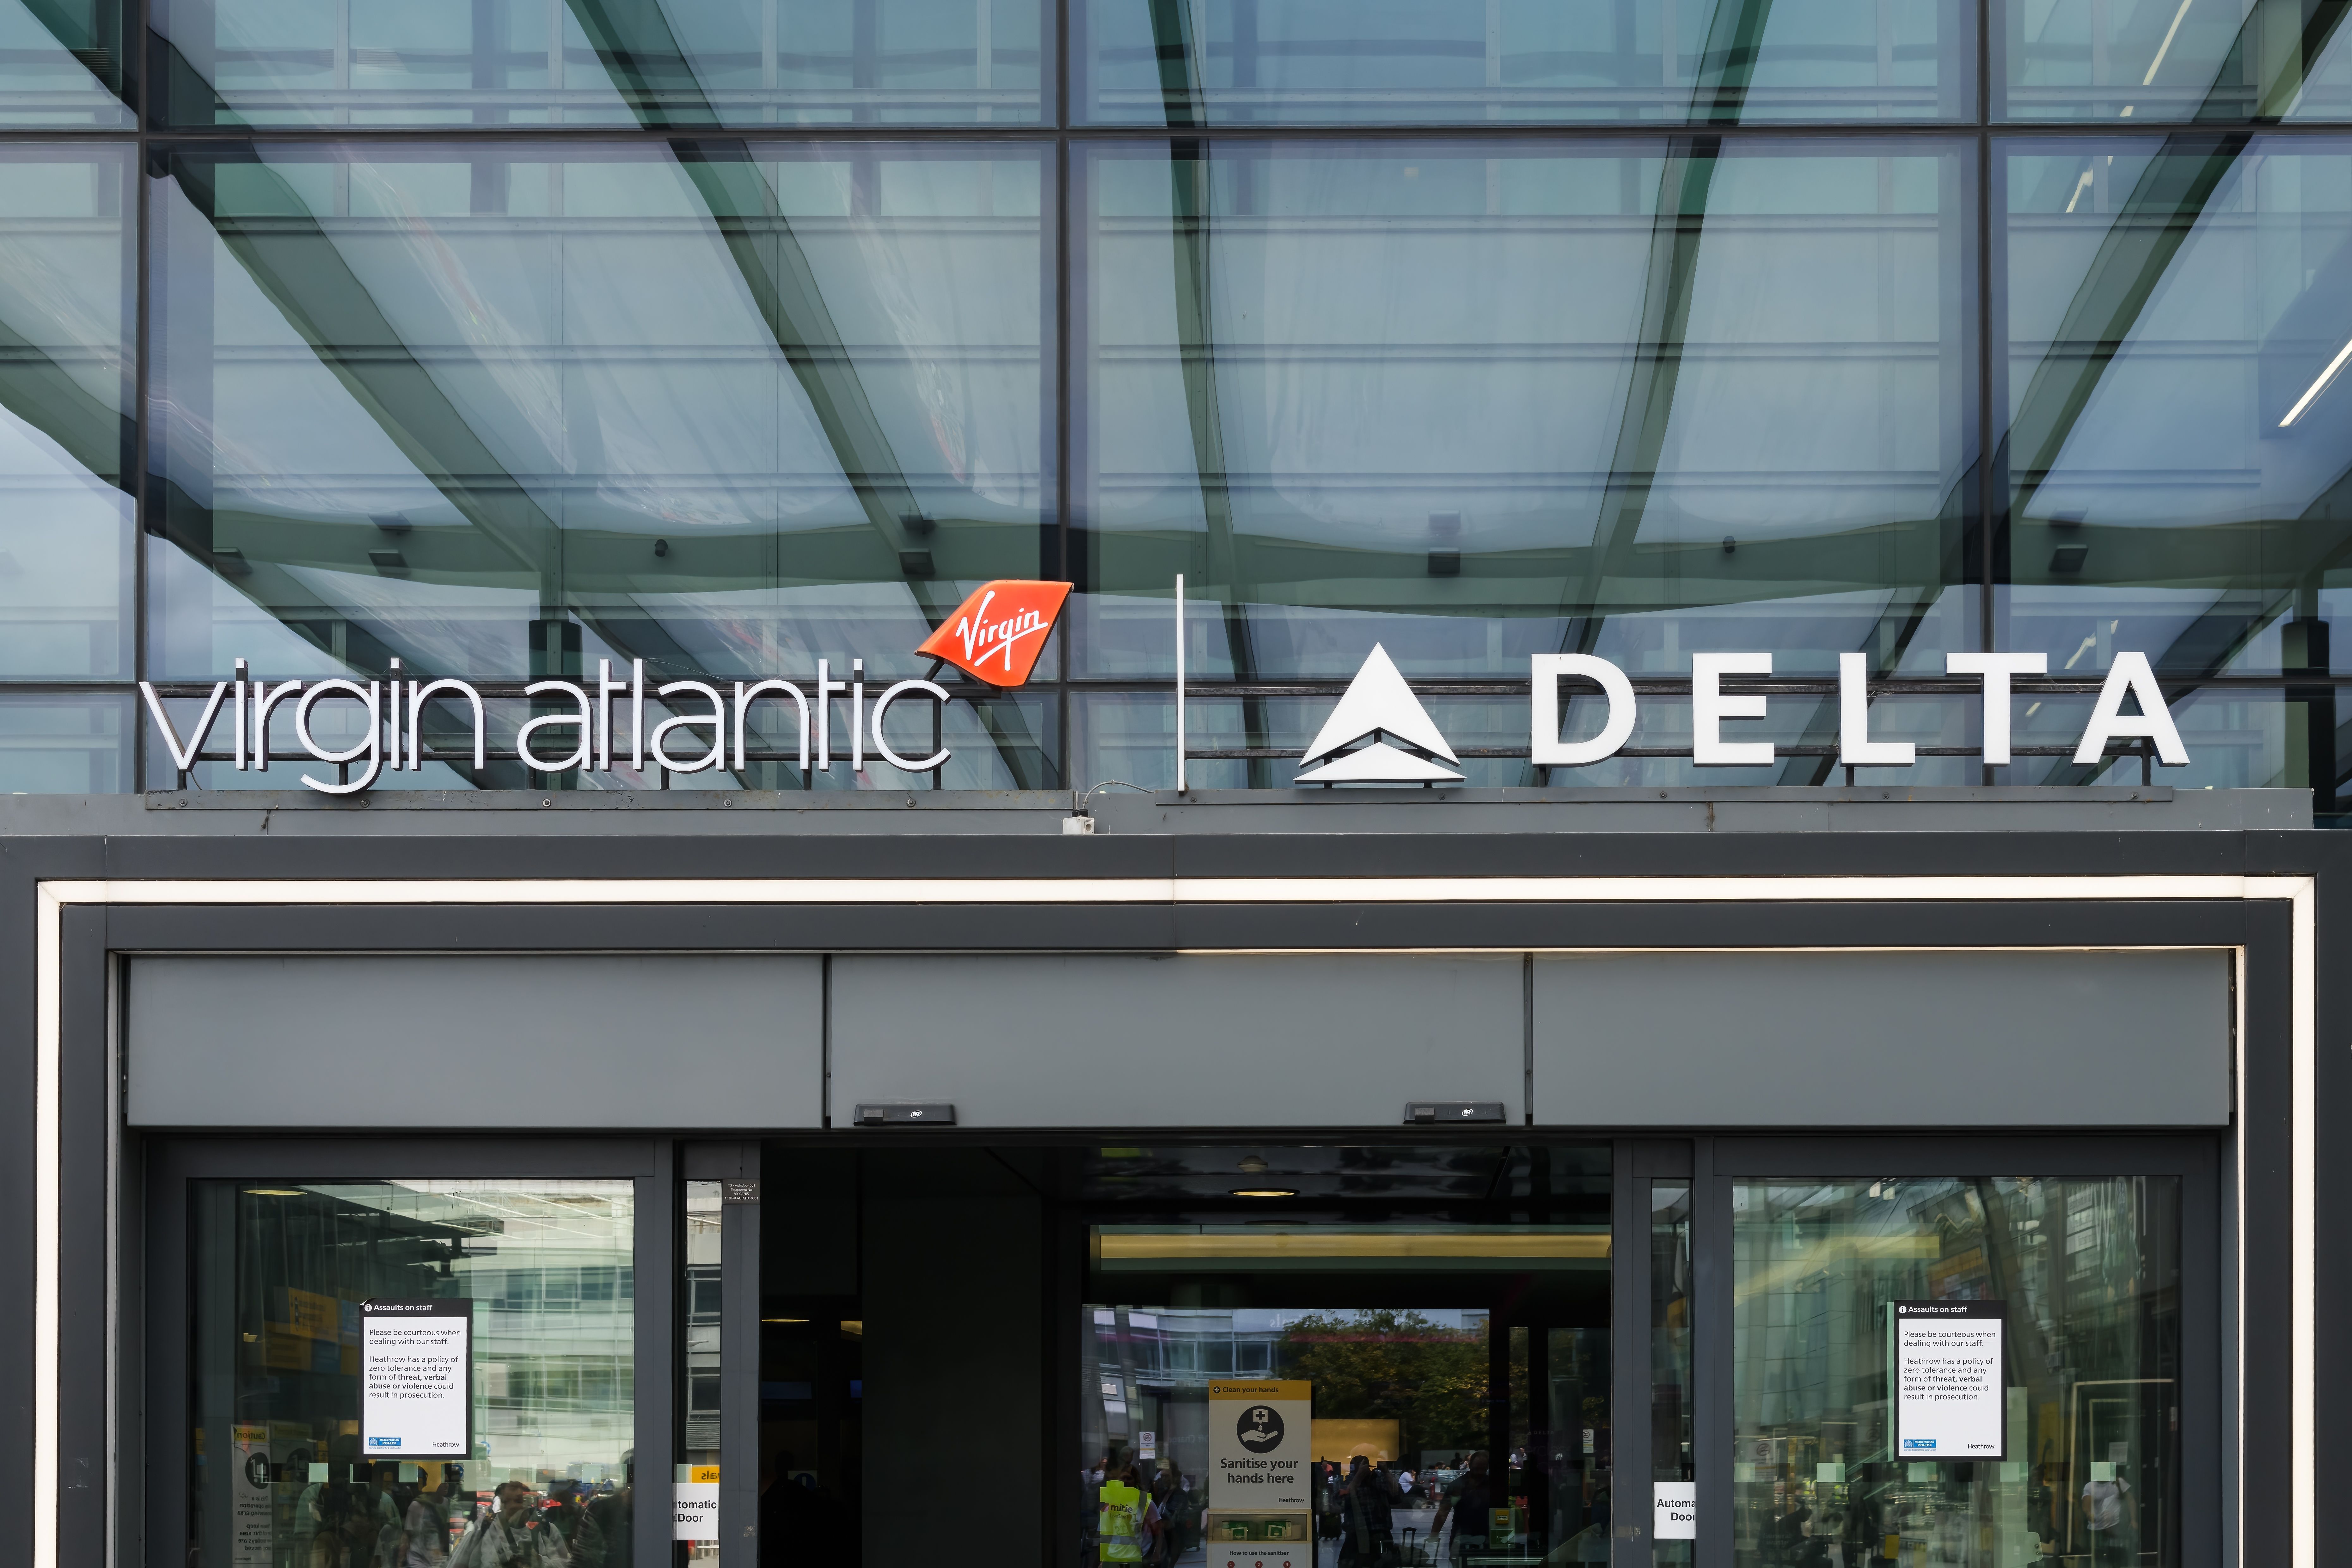 Delta Air Lines and Virgin Atlantic have joint facilities at London Heathrow Airport